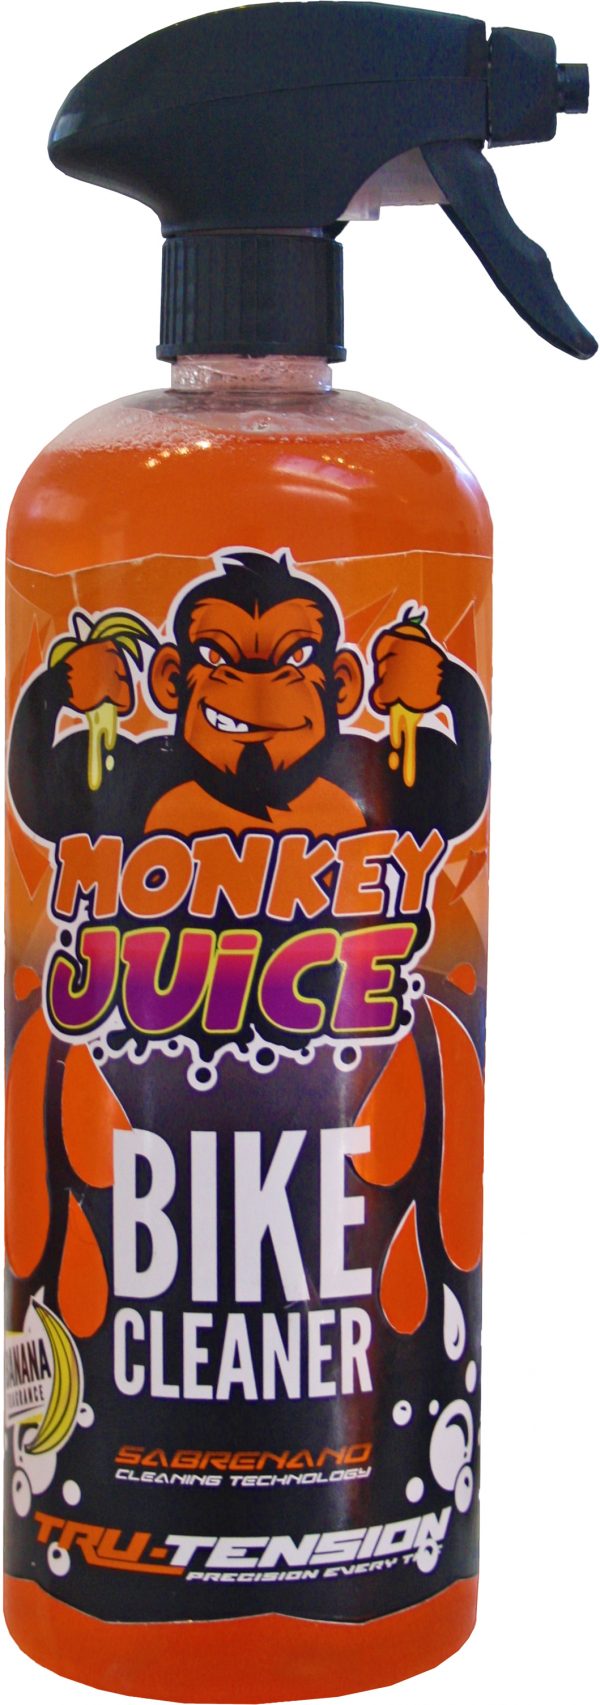 Monkey Juice Bike Cleaner Image